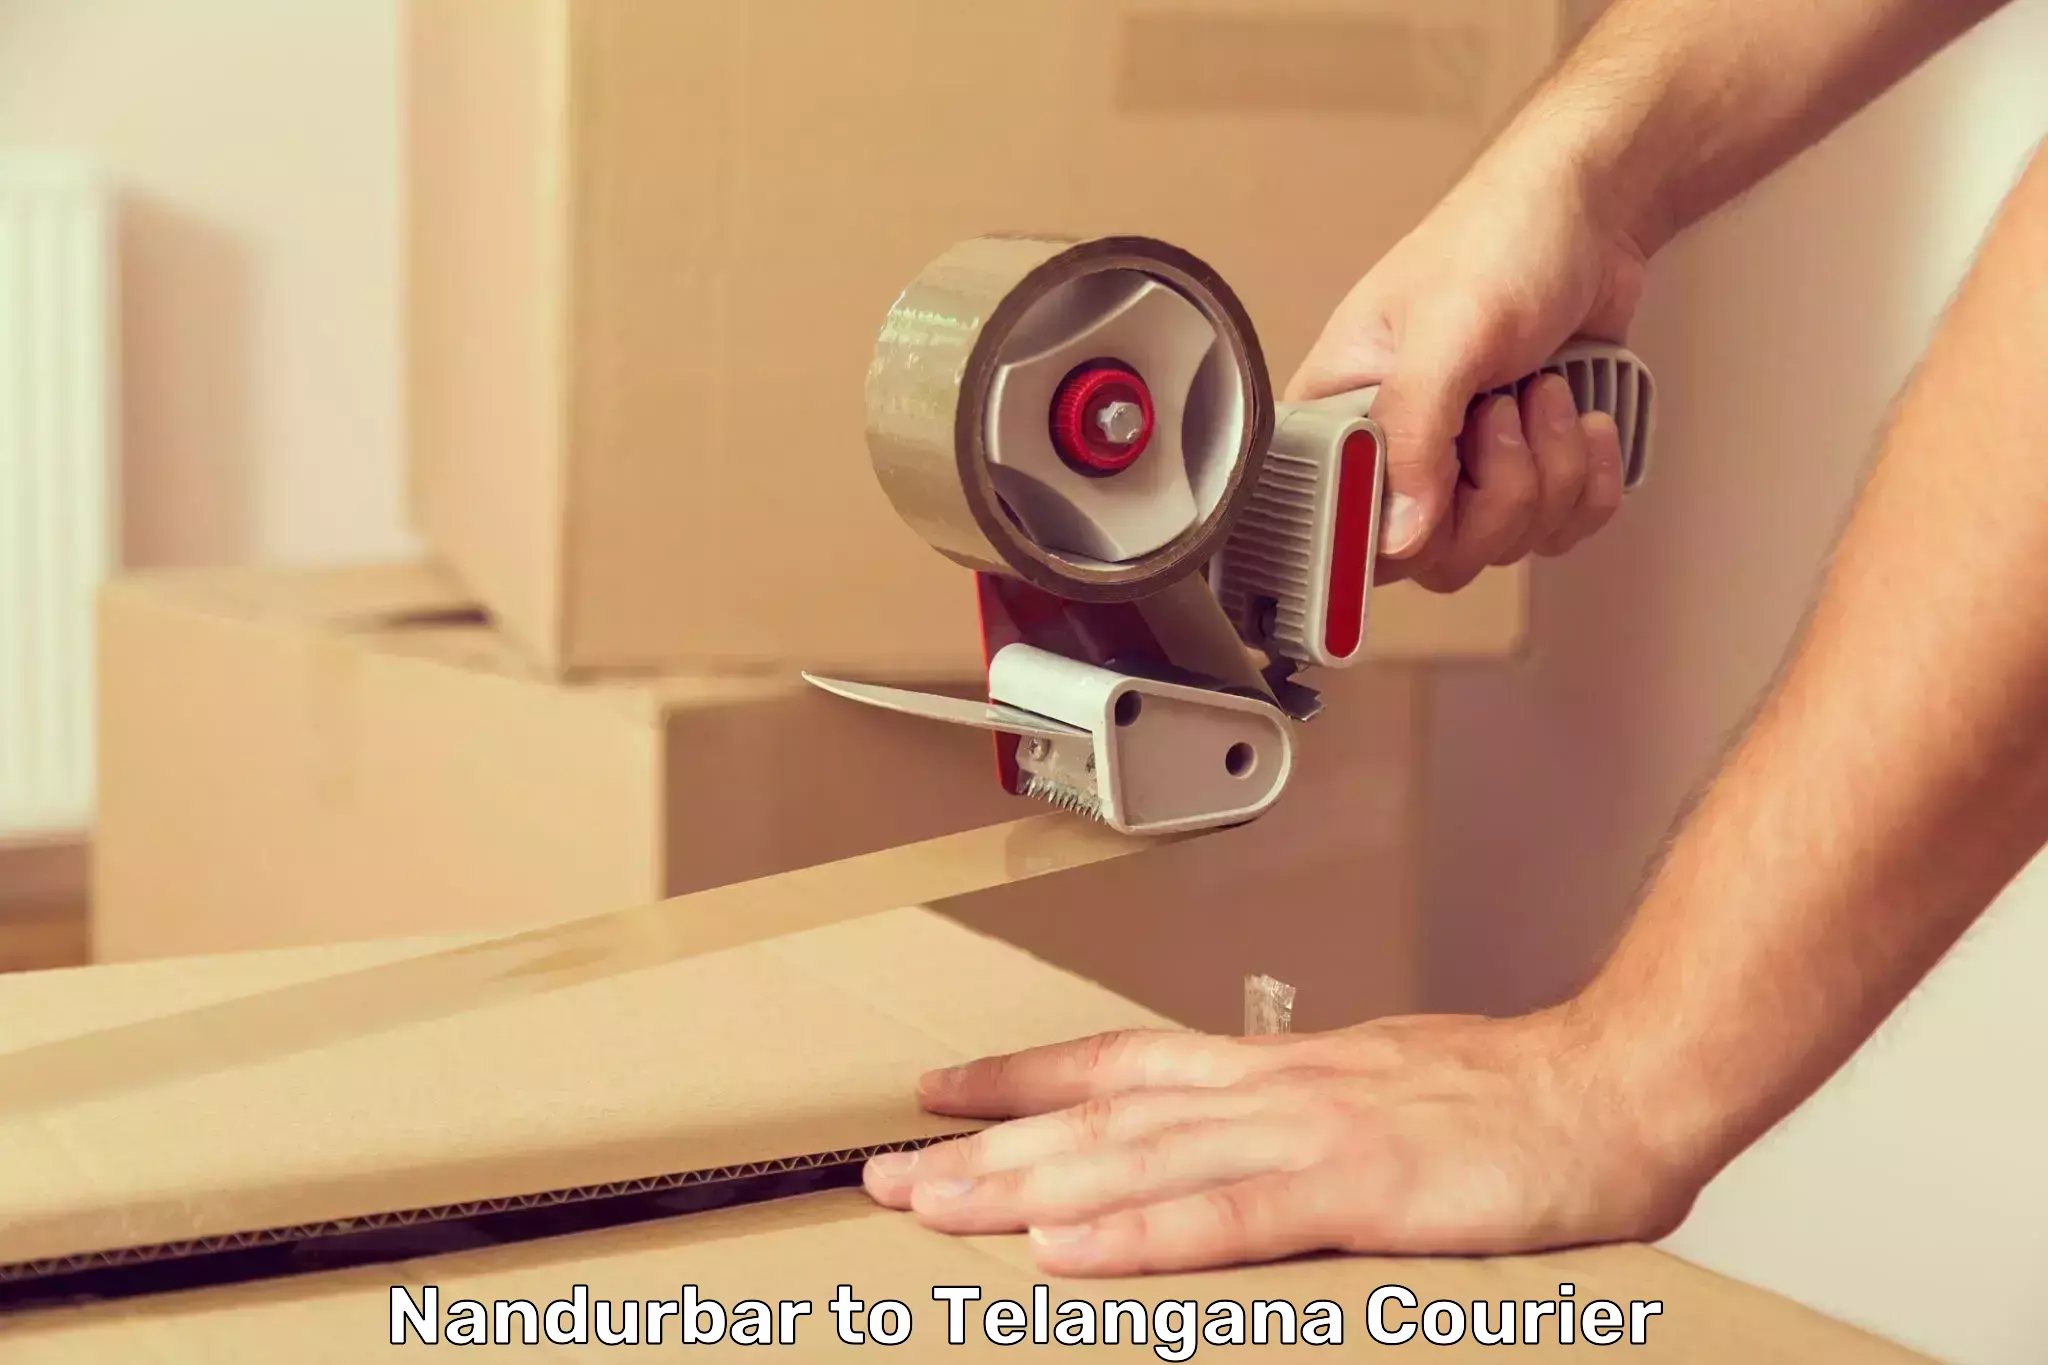 Global courier networks Nandurbar to Shadnagar